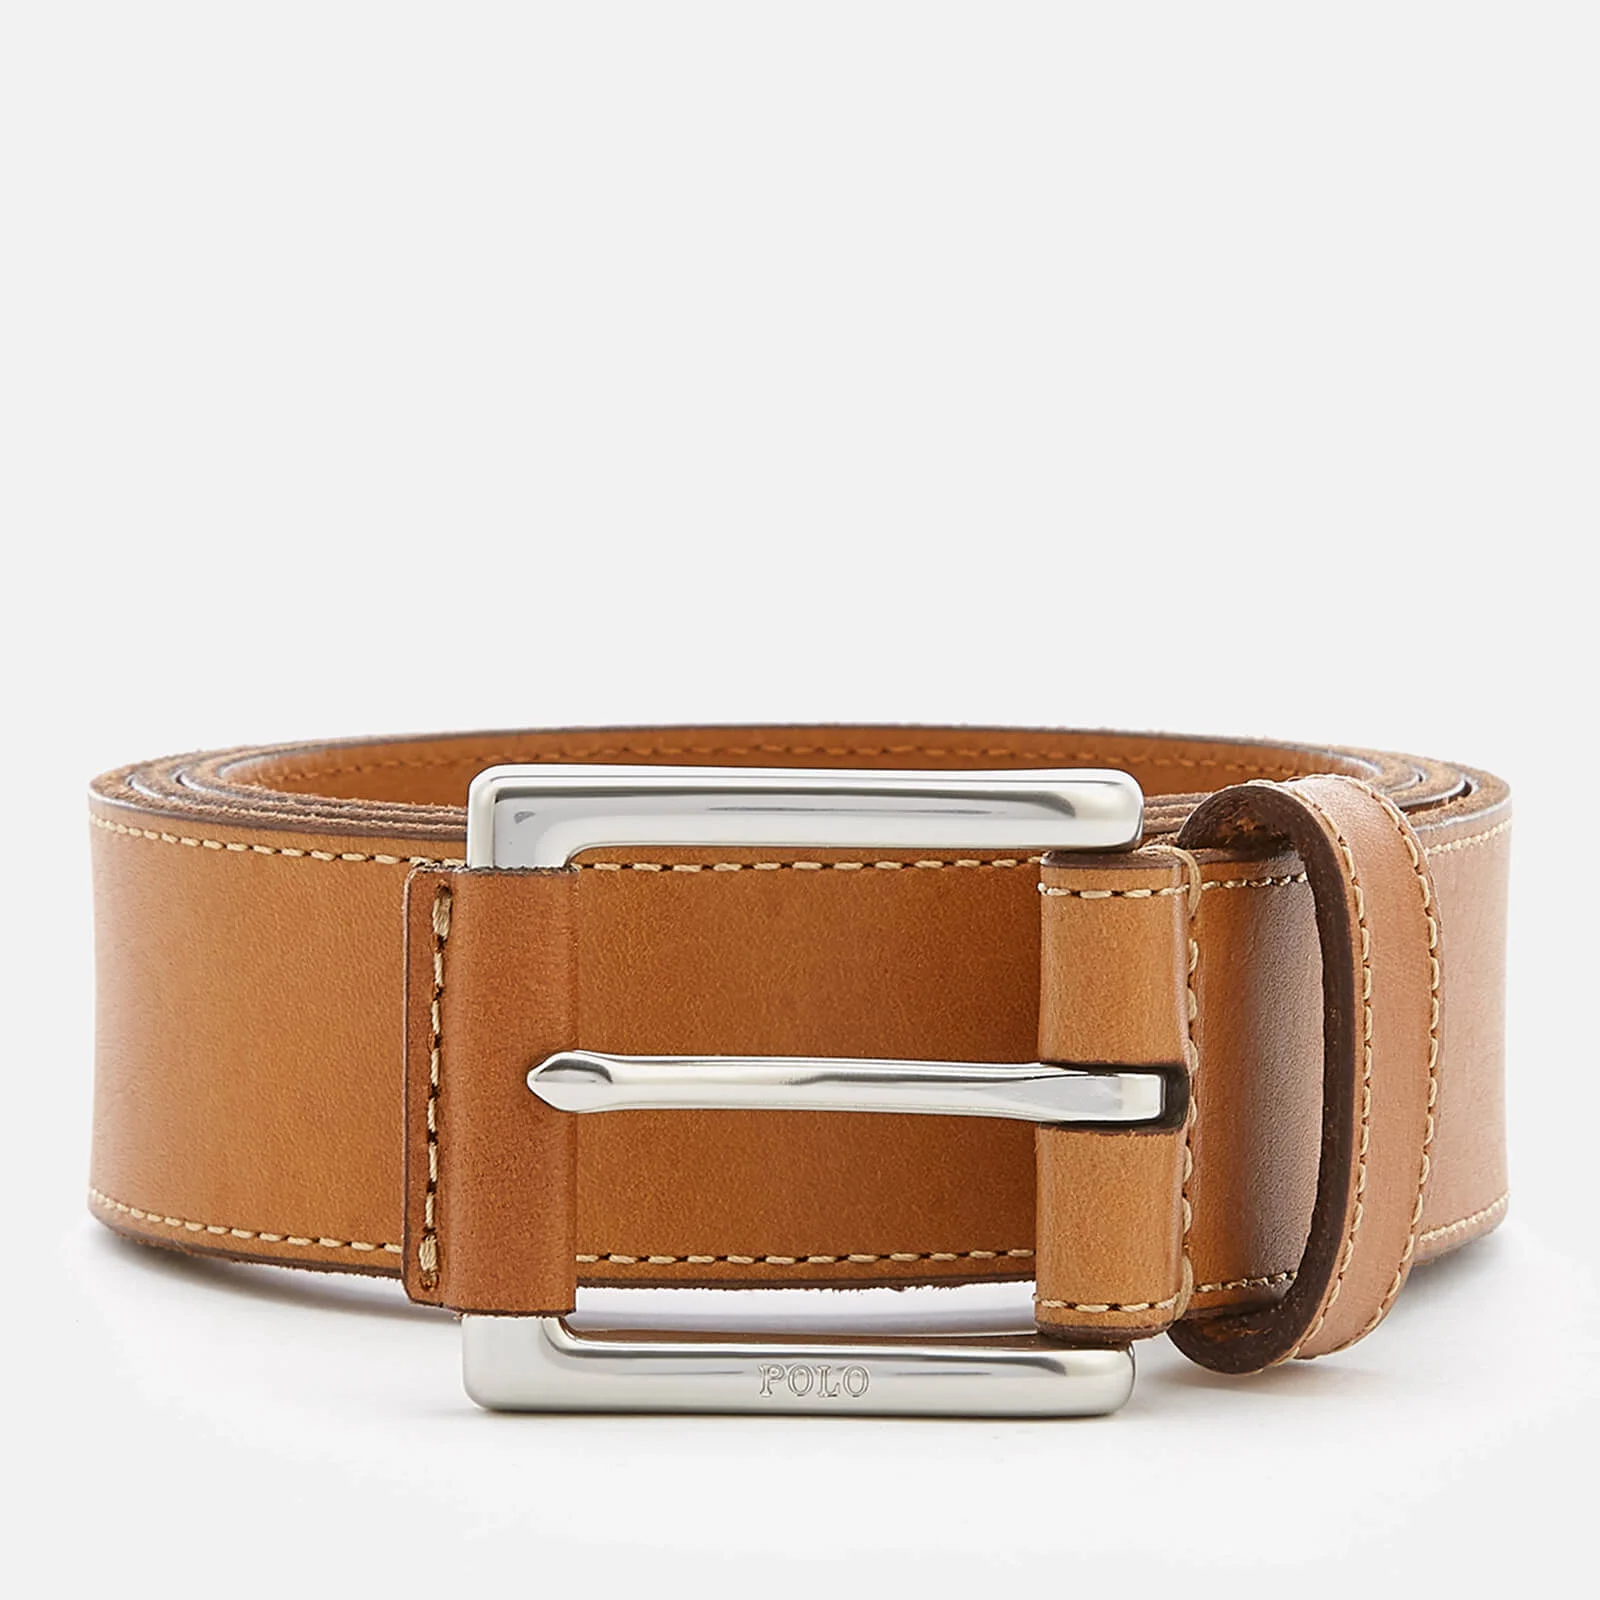 Polo Ralph Lauren Men's Casual Leather Belt - Tan Image 1